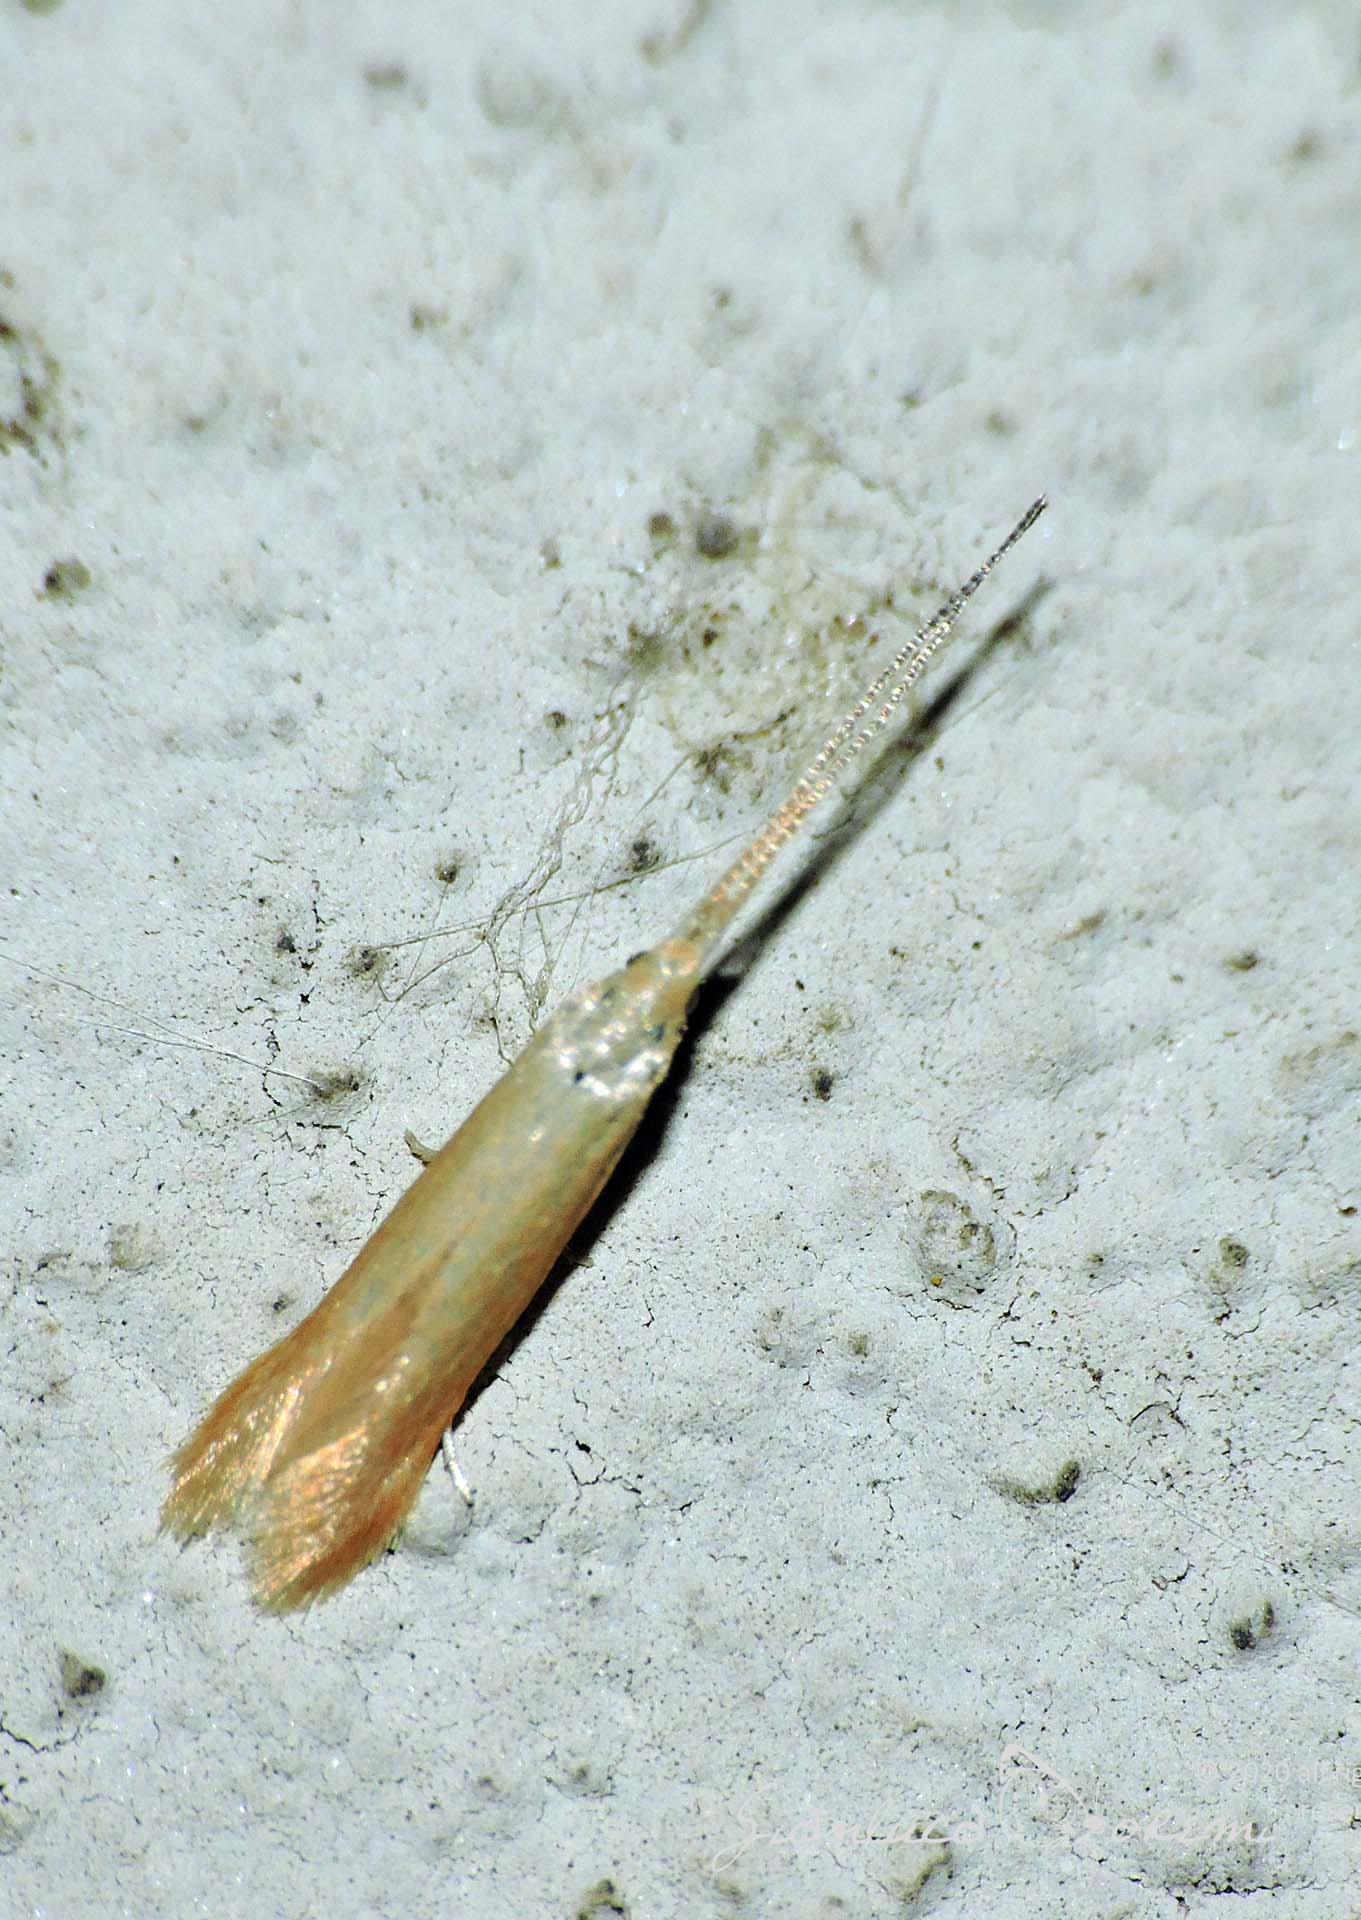 Coleophora cecidophorella